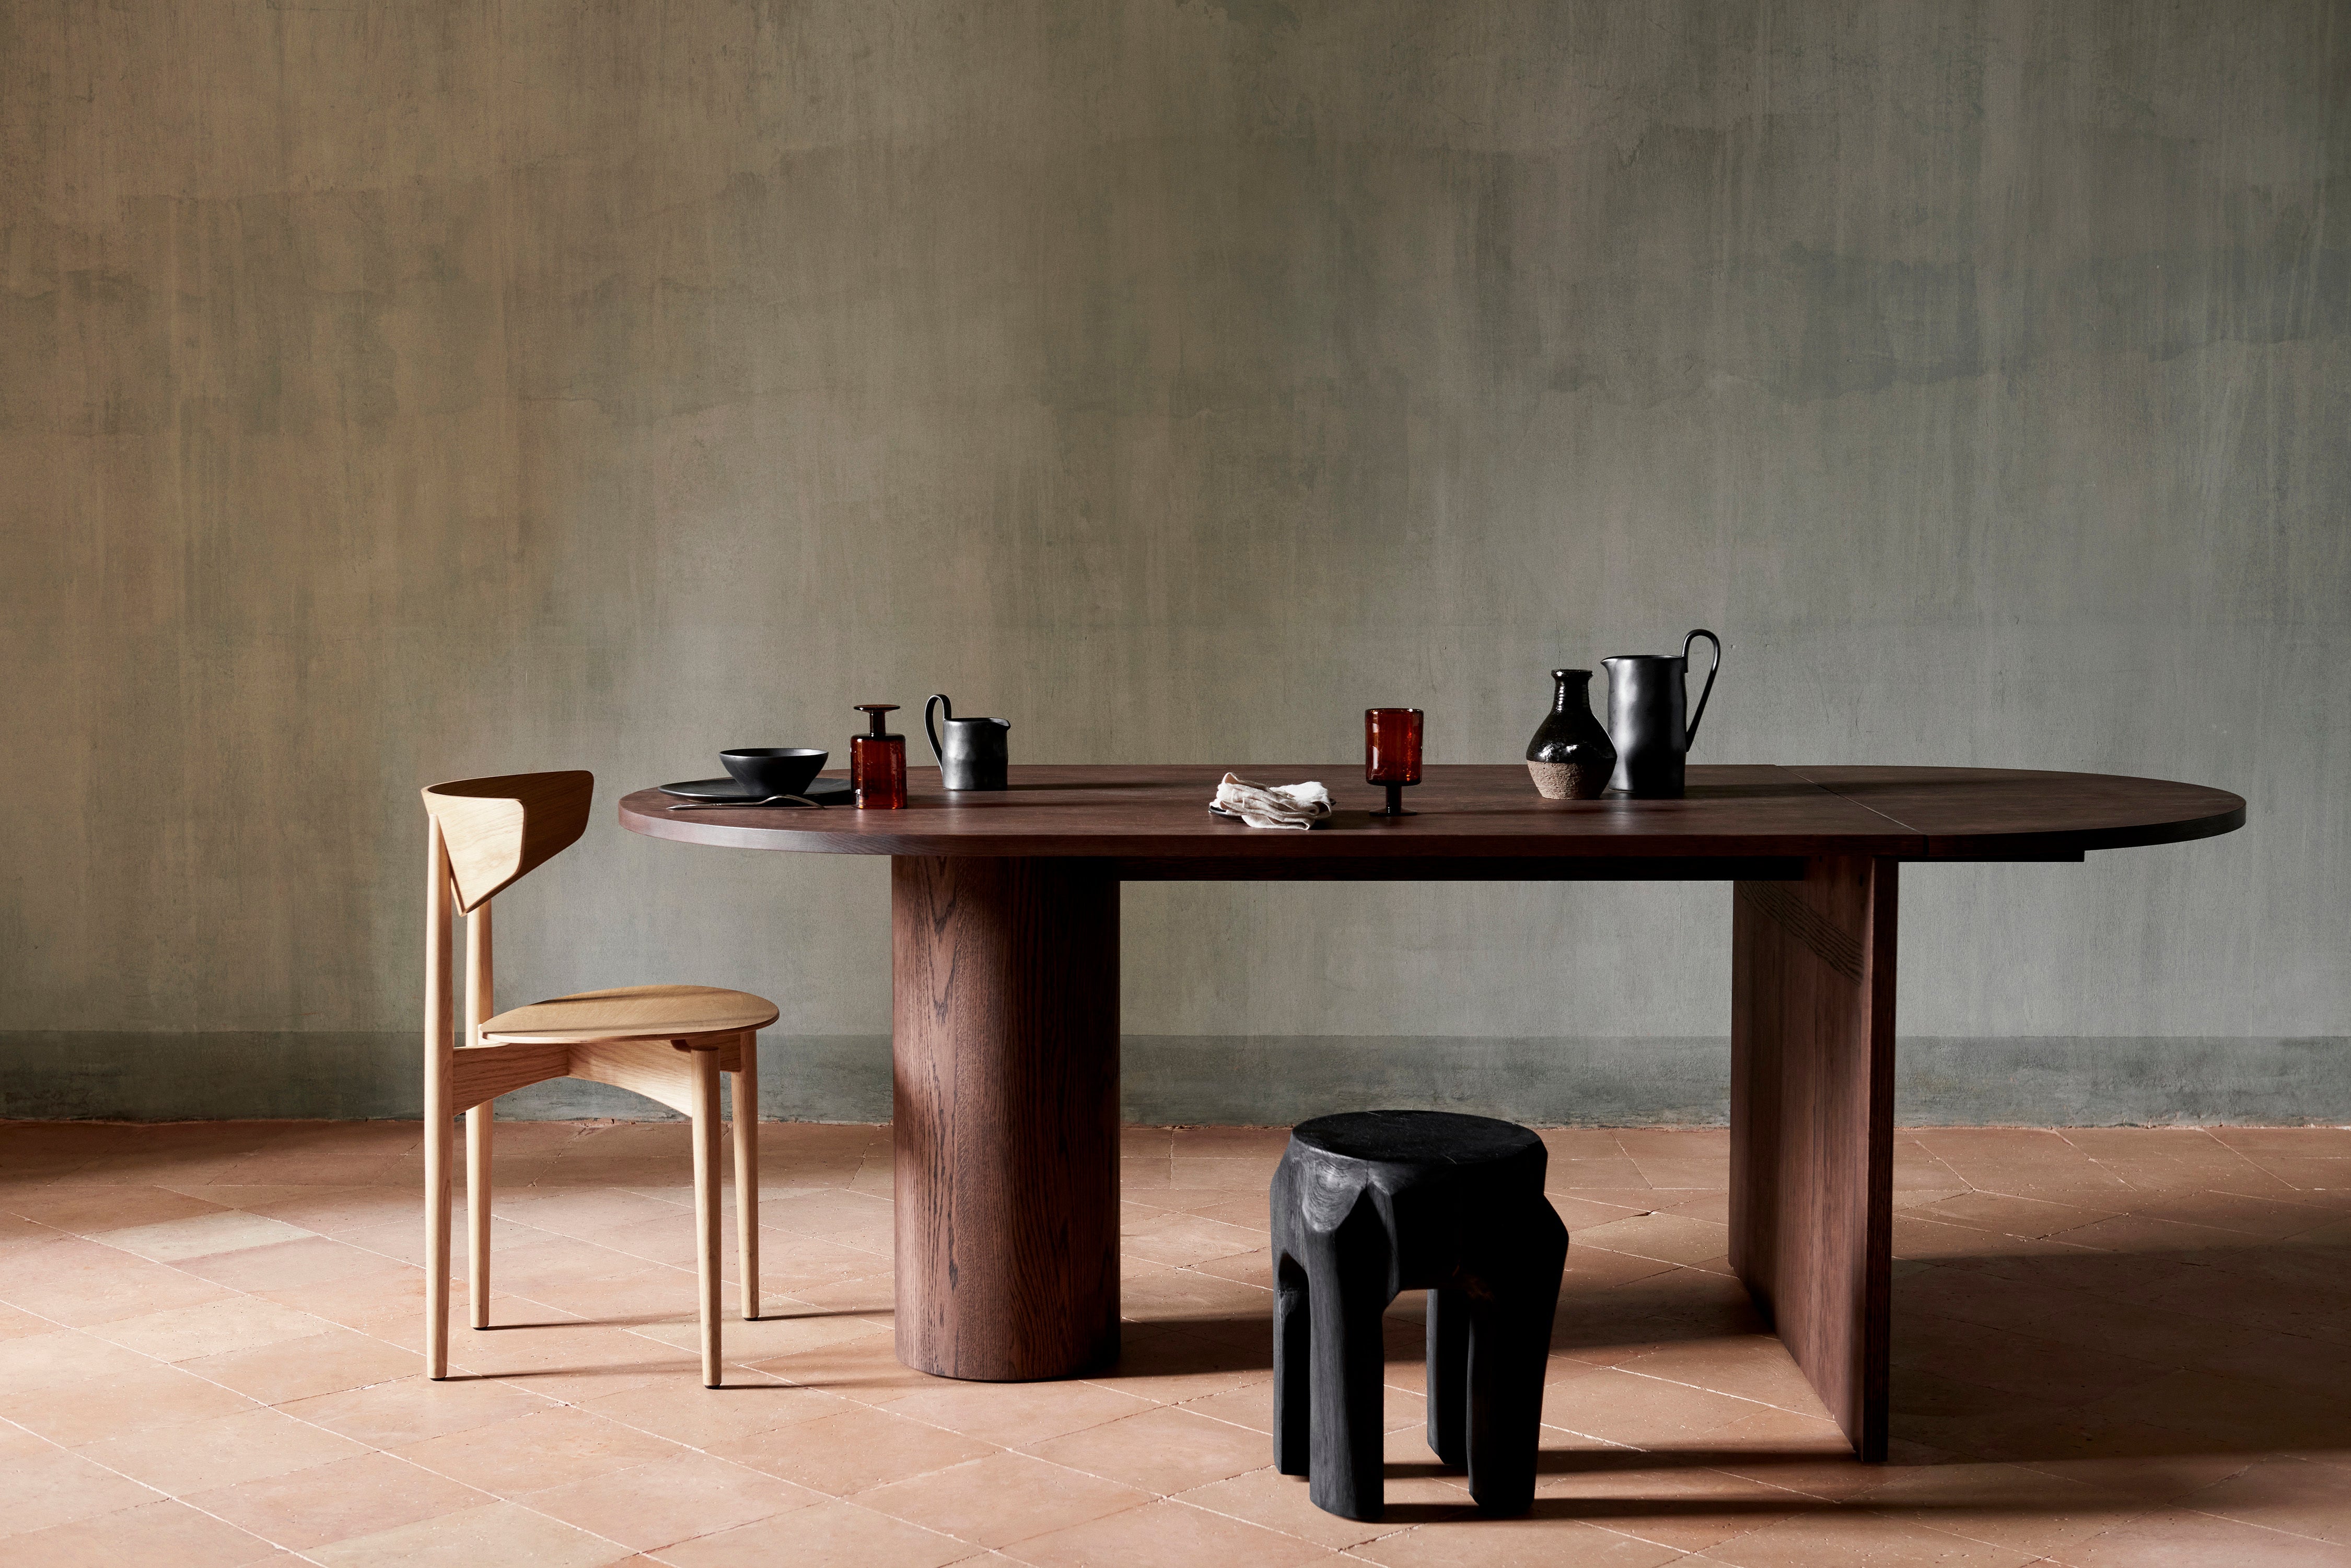 New Ferm Living SS23 Collection: Modern Scandinavian Design for Your Home